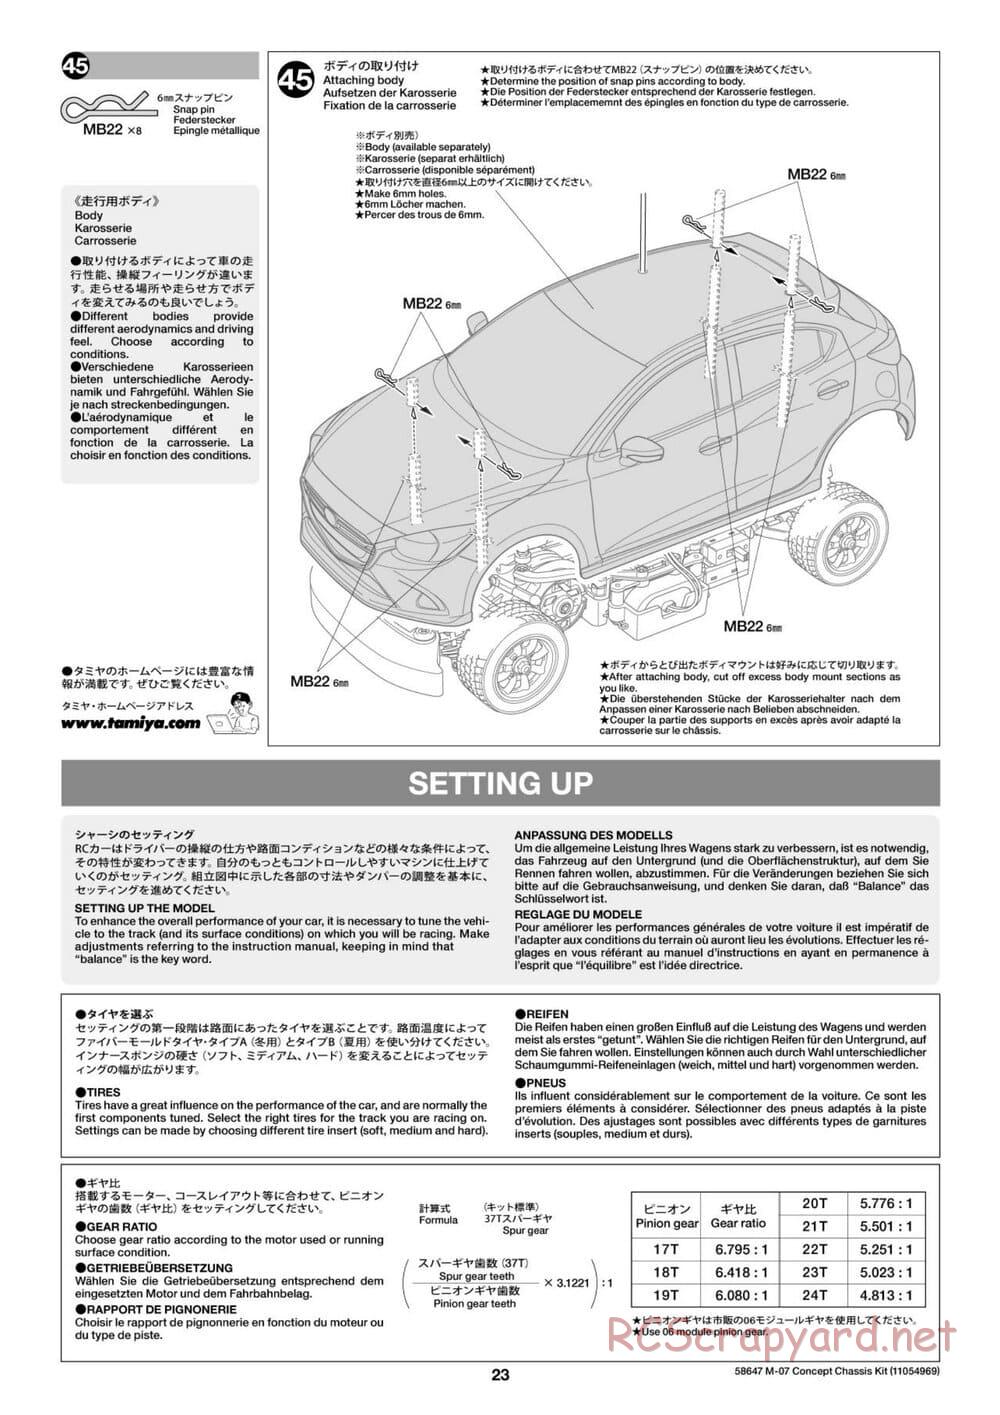 Tamiya - M-07 Concept Chassis - Manual - Page 23